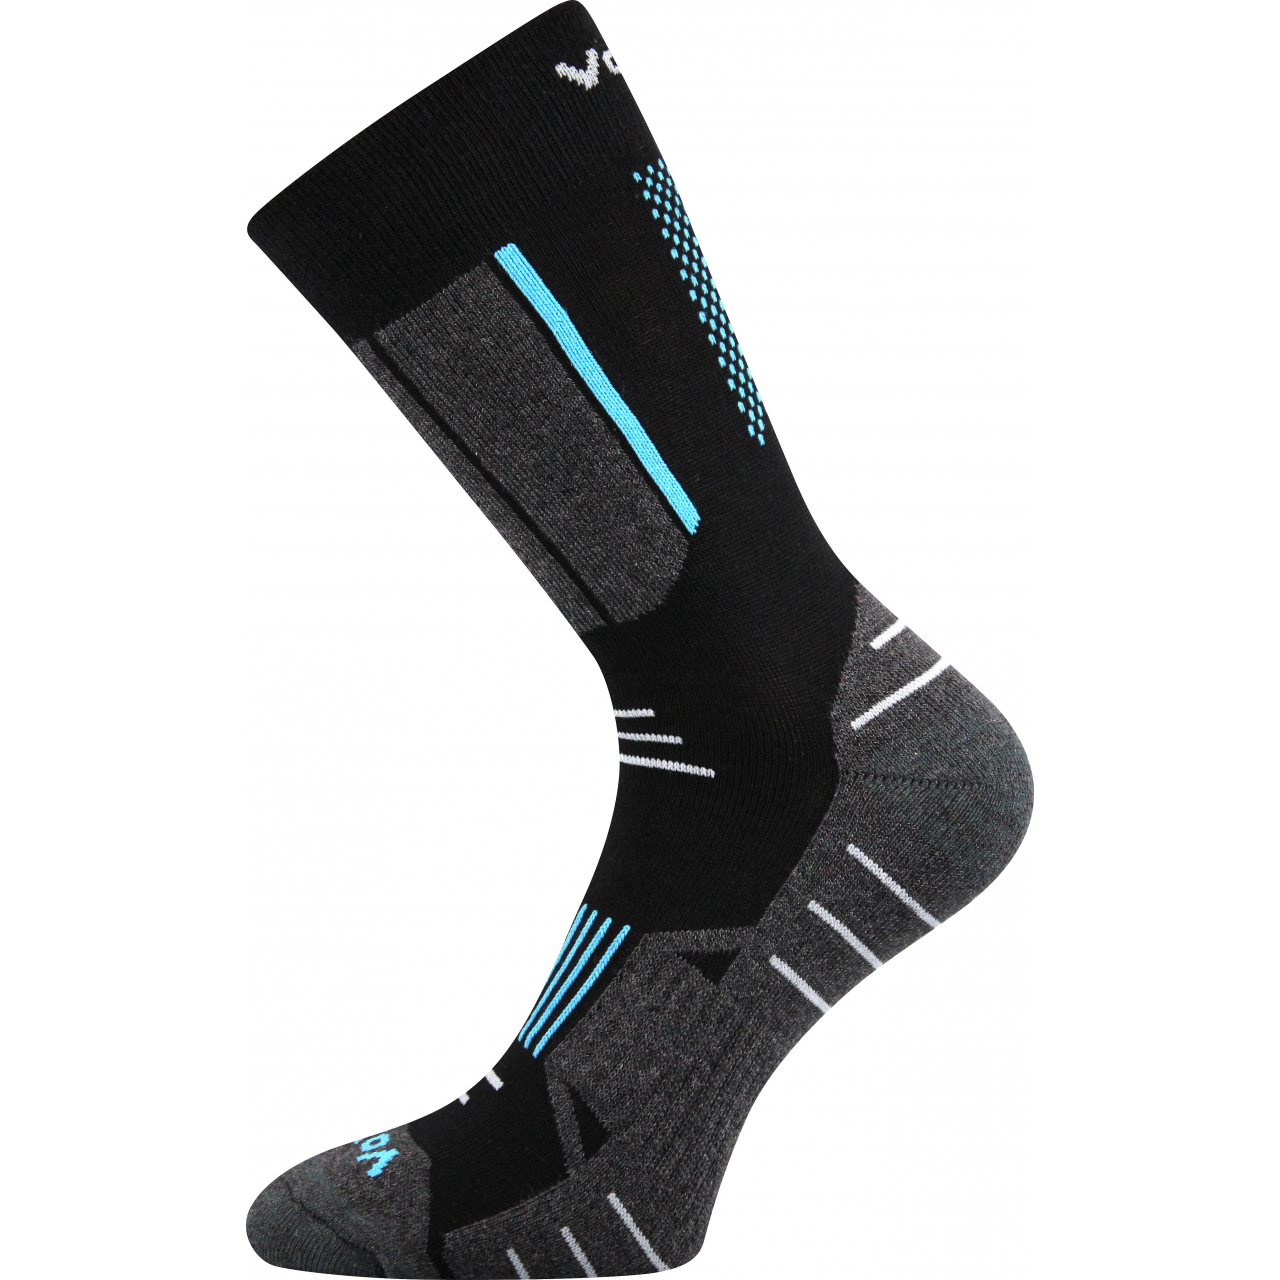 Ponožky turistické Voxx Avion - černé-šedé, 35-38